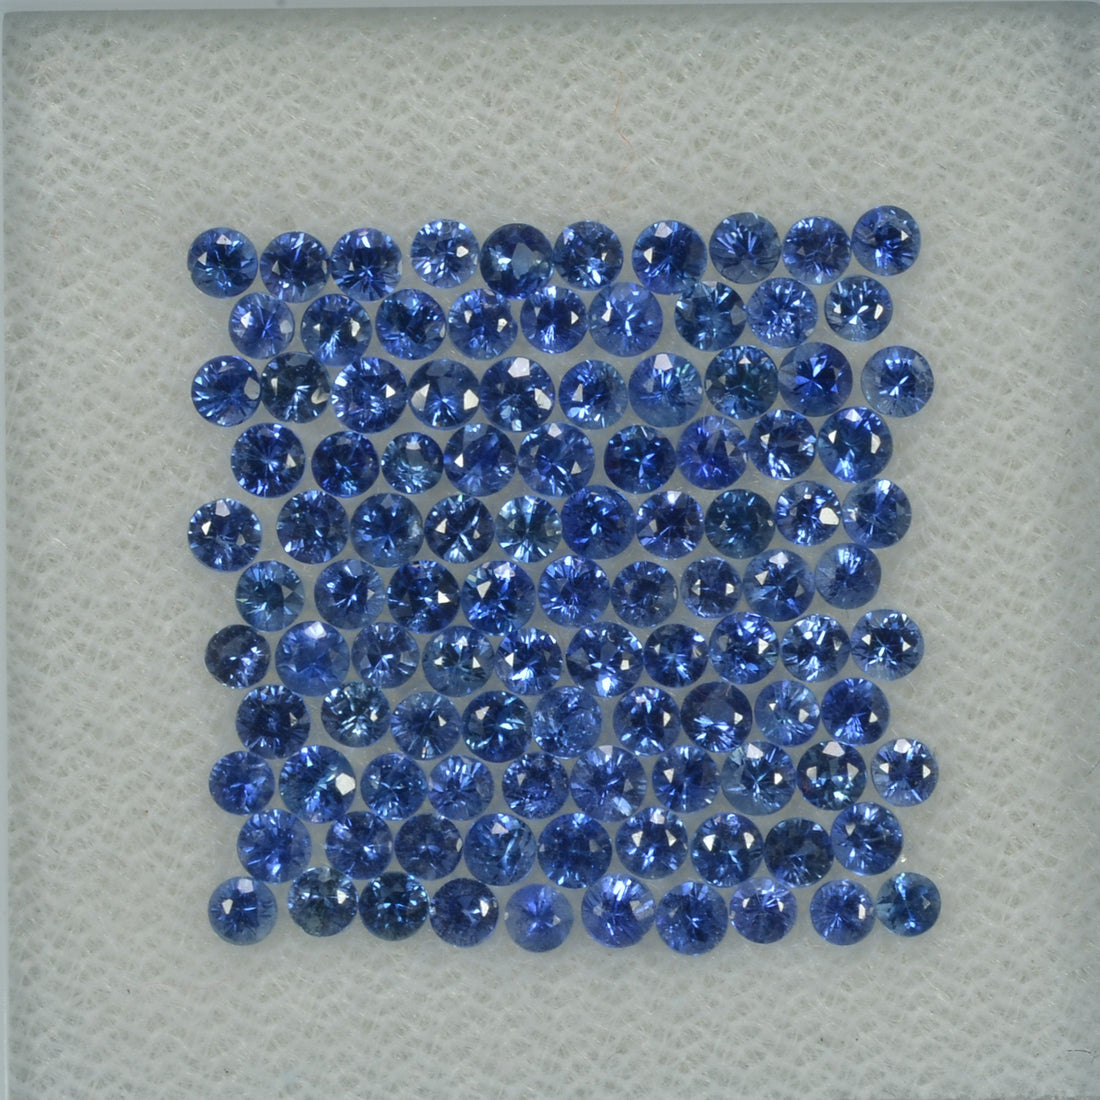 1.8-2.3 mm Natural Blue Sapphire Loose Gemstone Round Diamond Cut Vs Quality Color - Thai Gems Export Ltd.